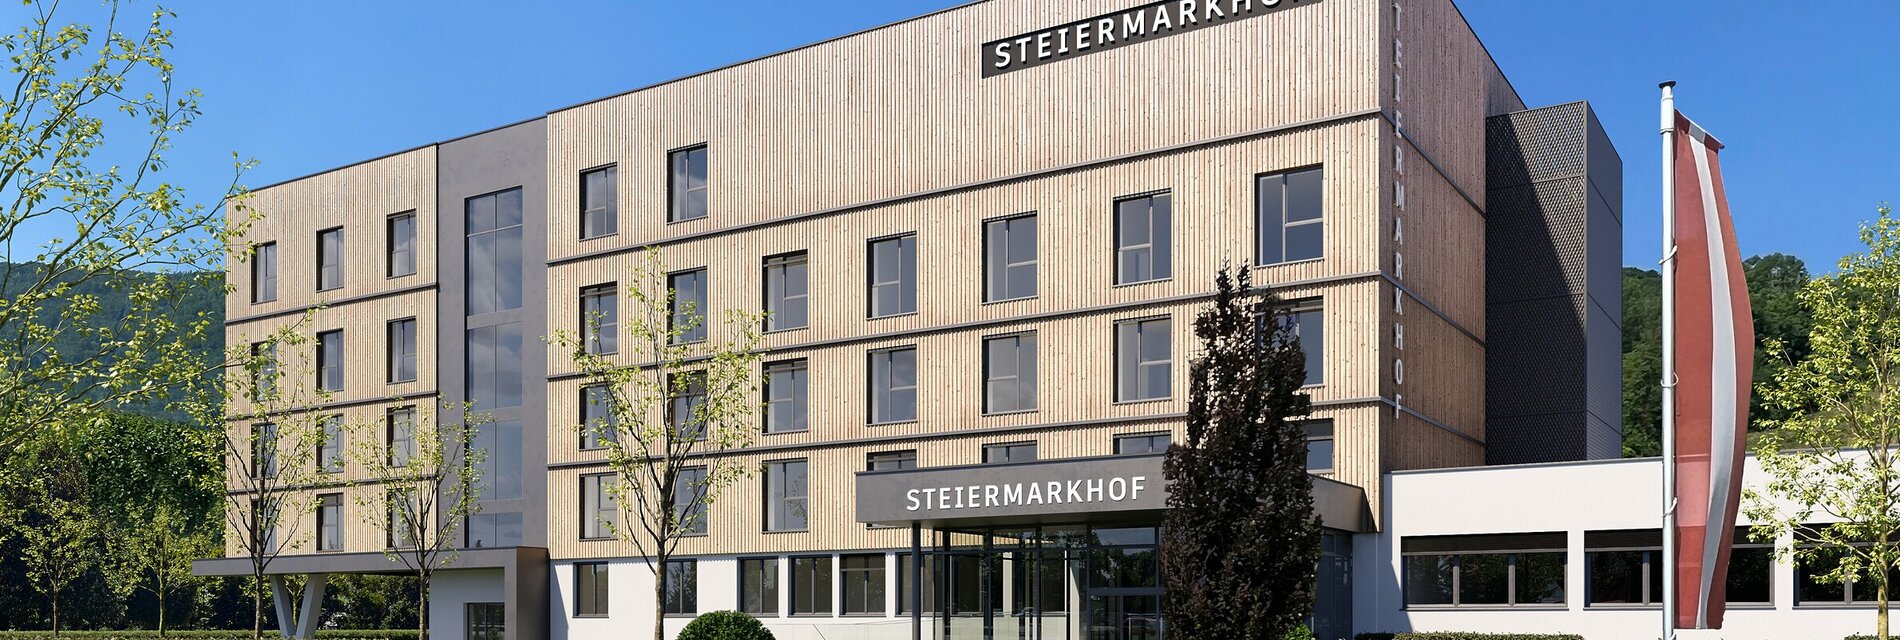 Hotel Steiermarkhof